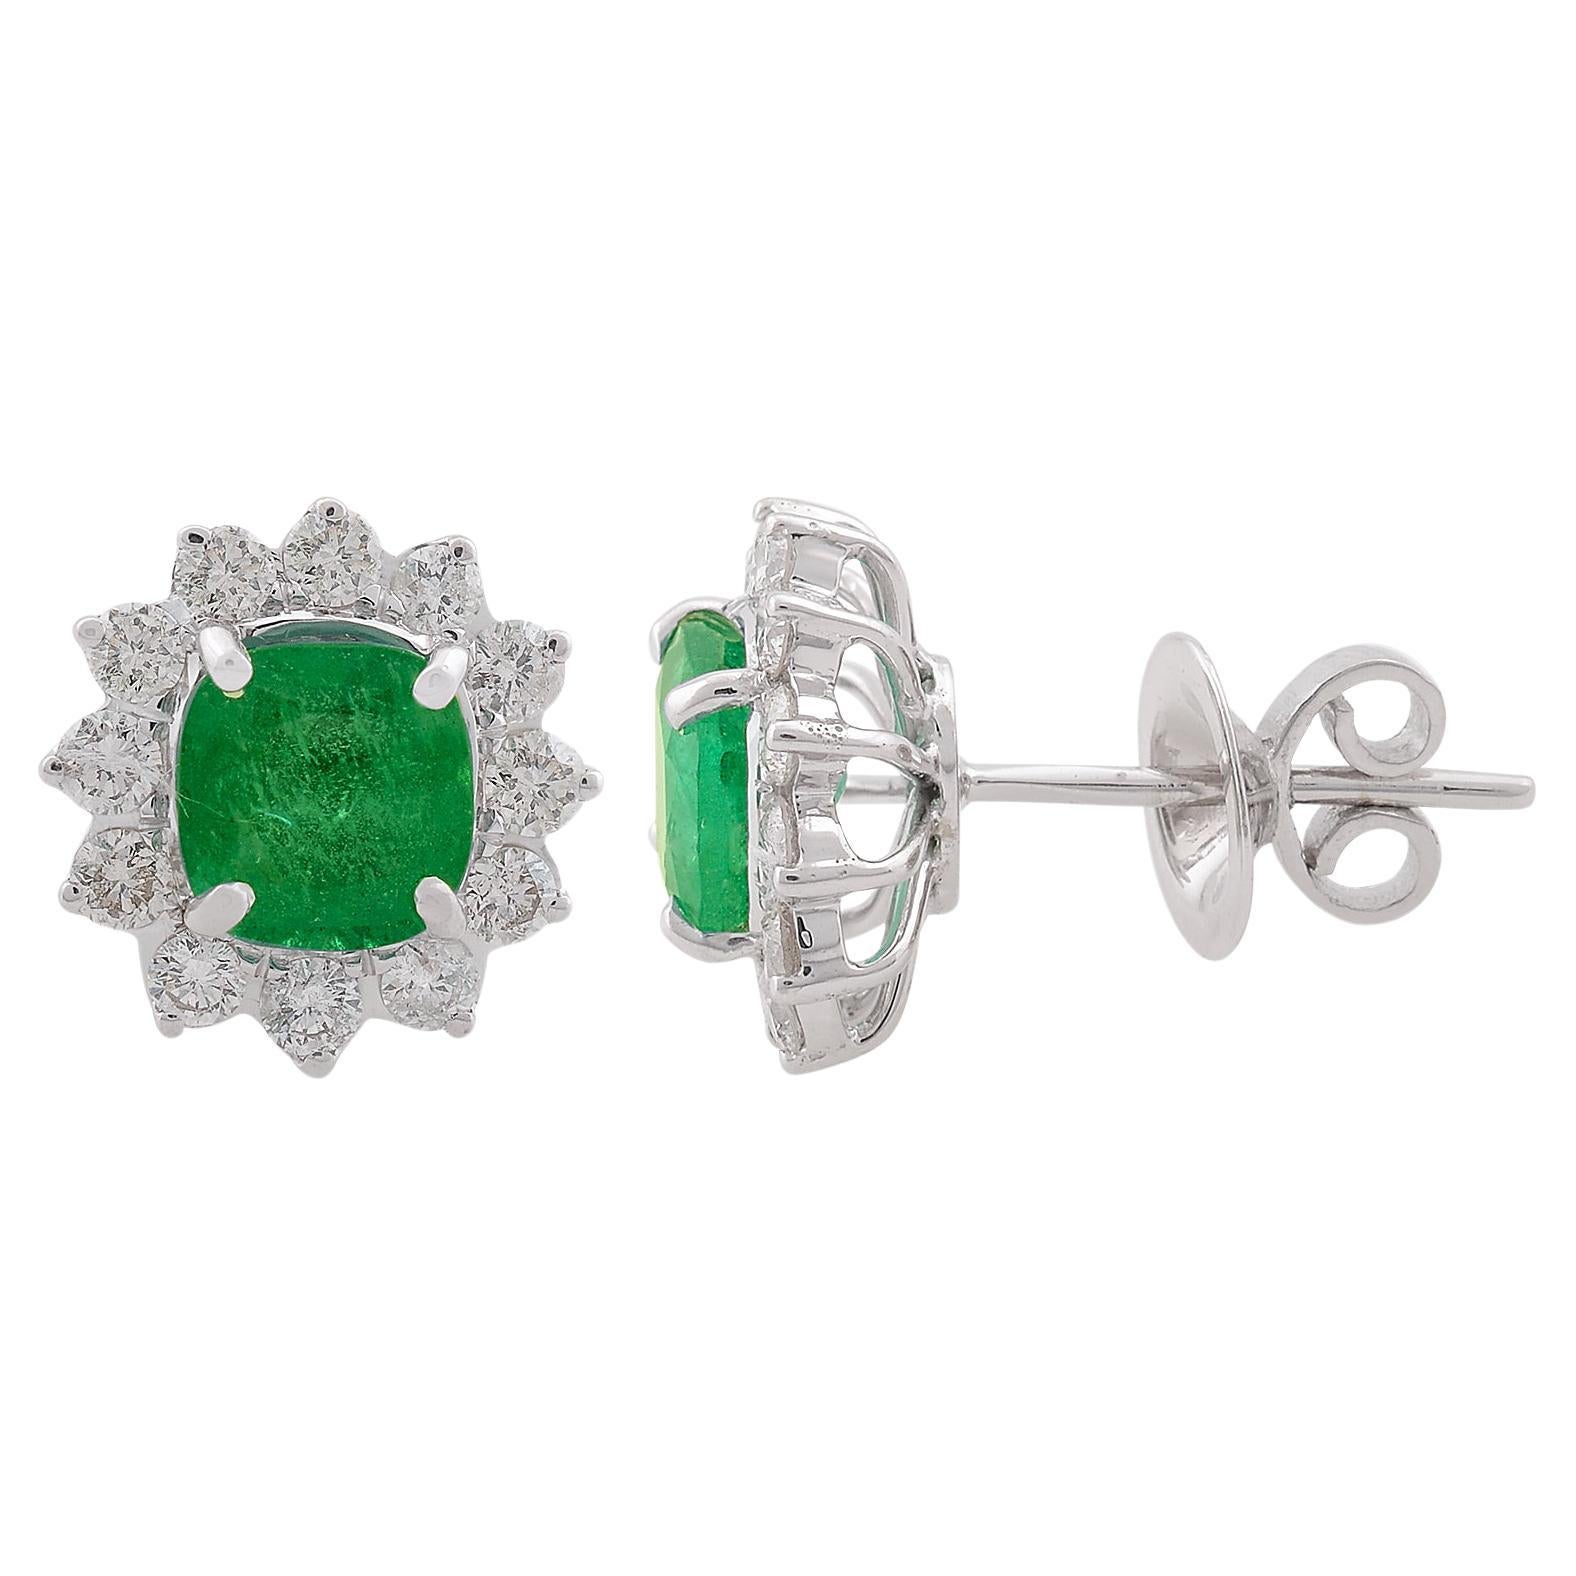 Zambian Emerald Gemstone Stud Earrings Diamond 18 Karat White Gold Fine Jewelry